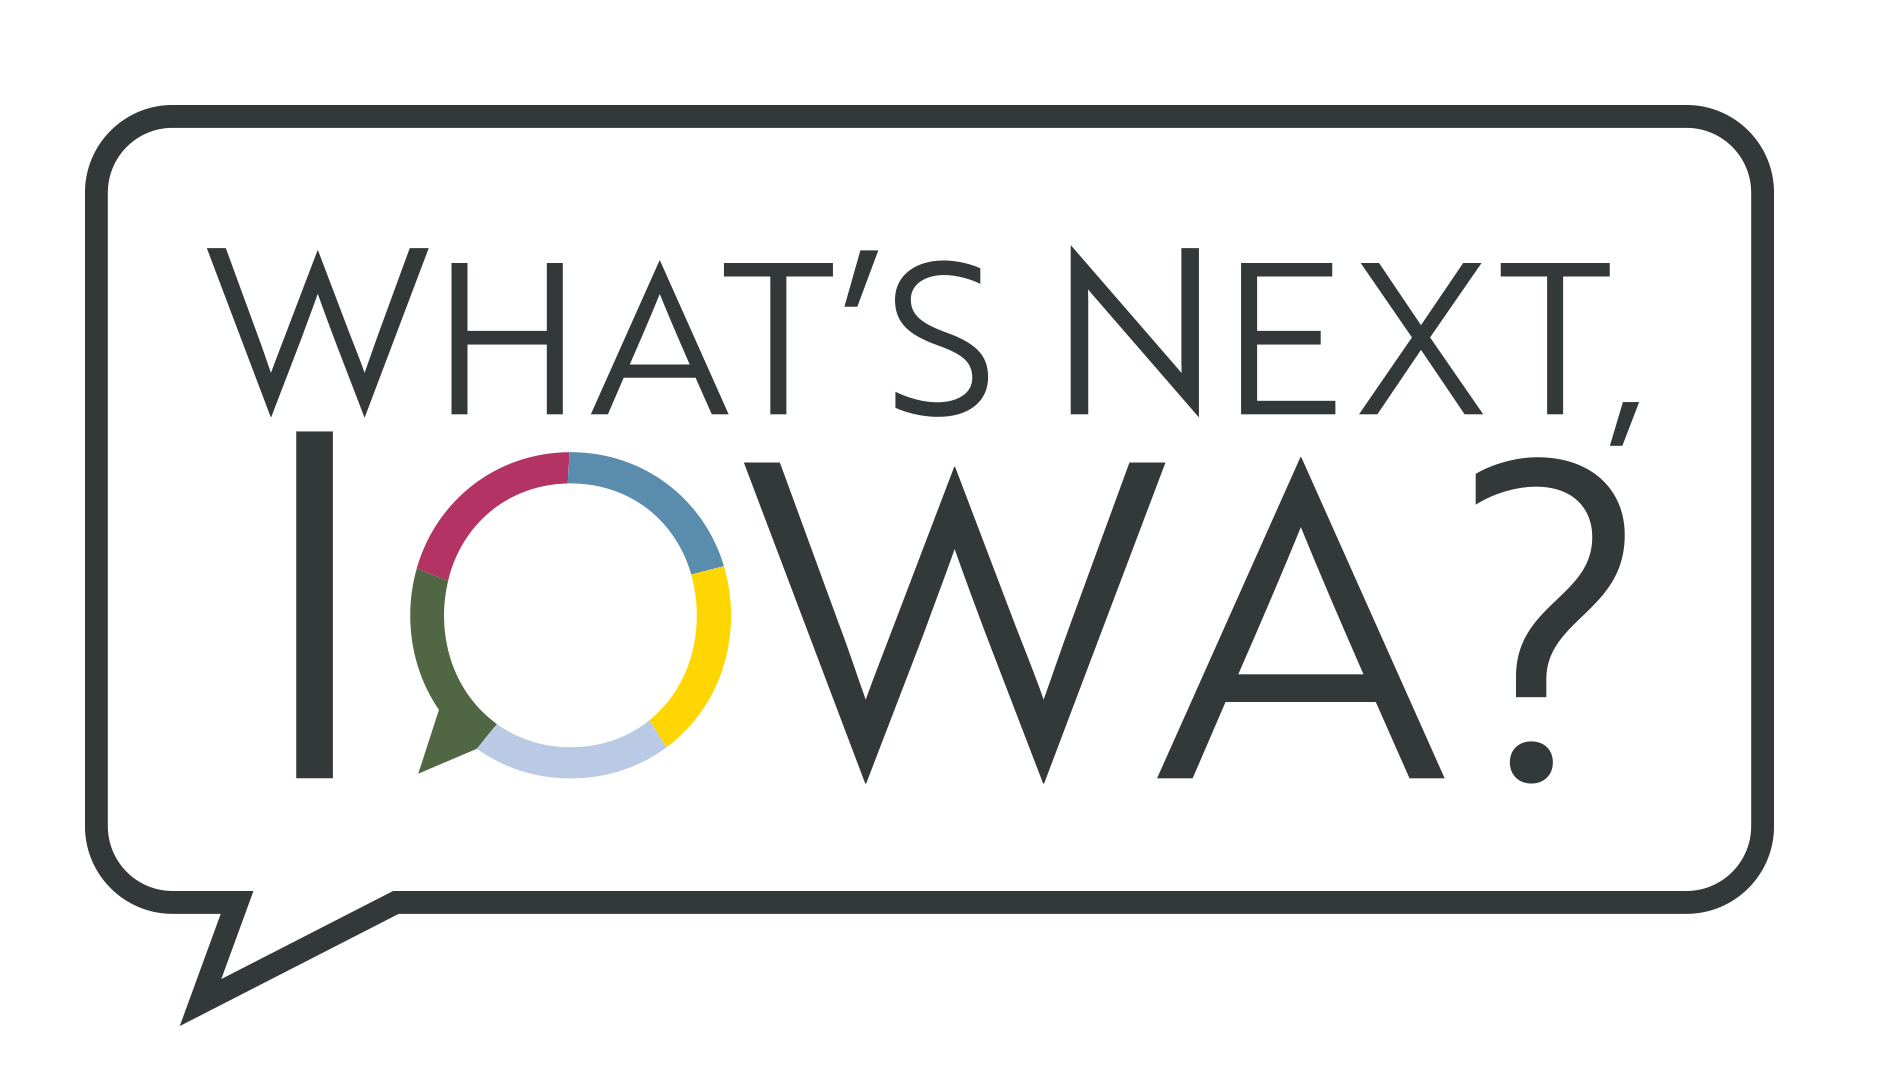 What's Next, Iowa?